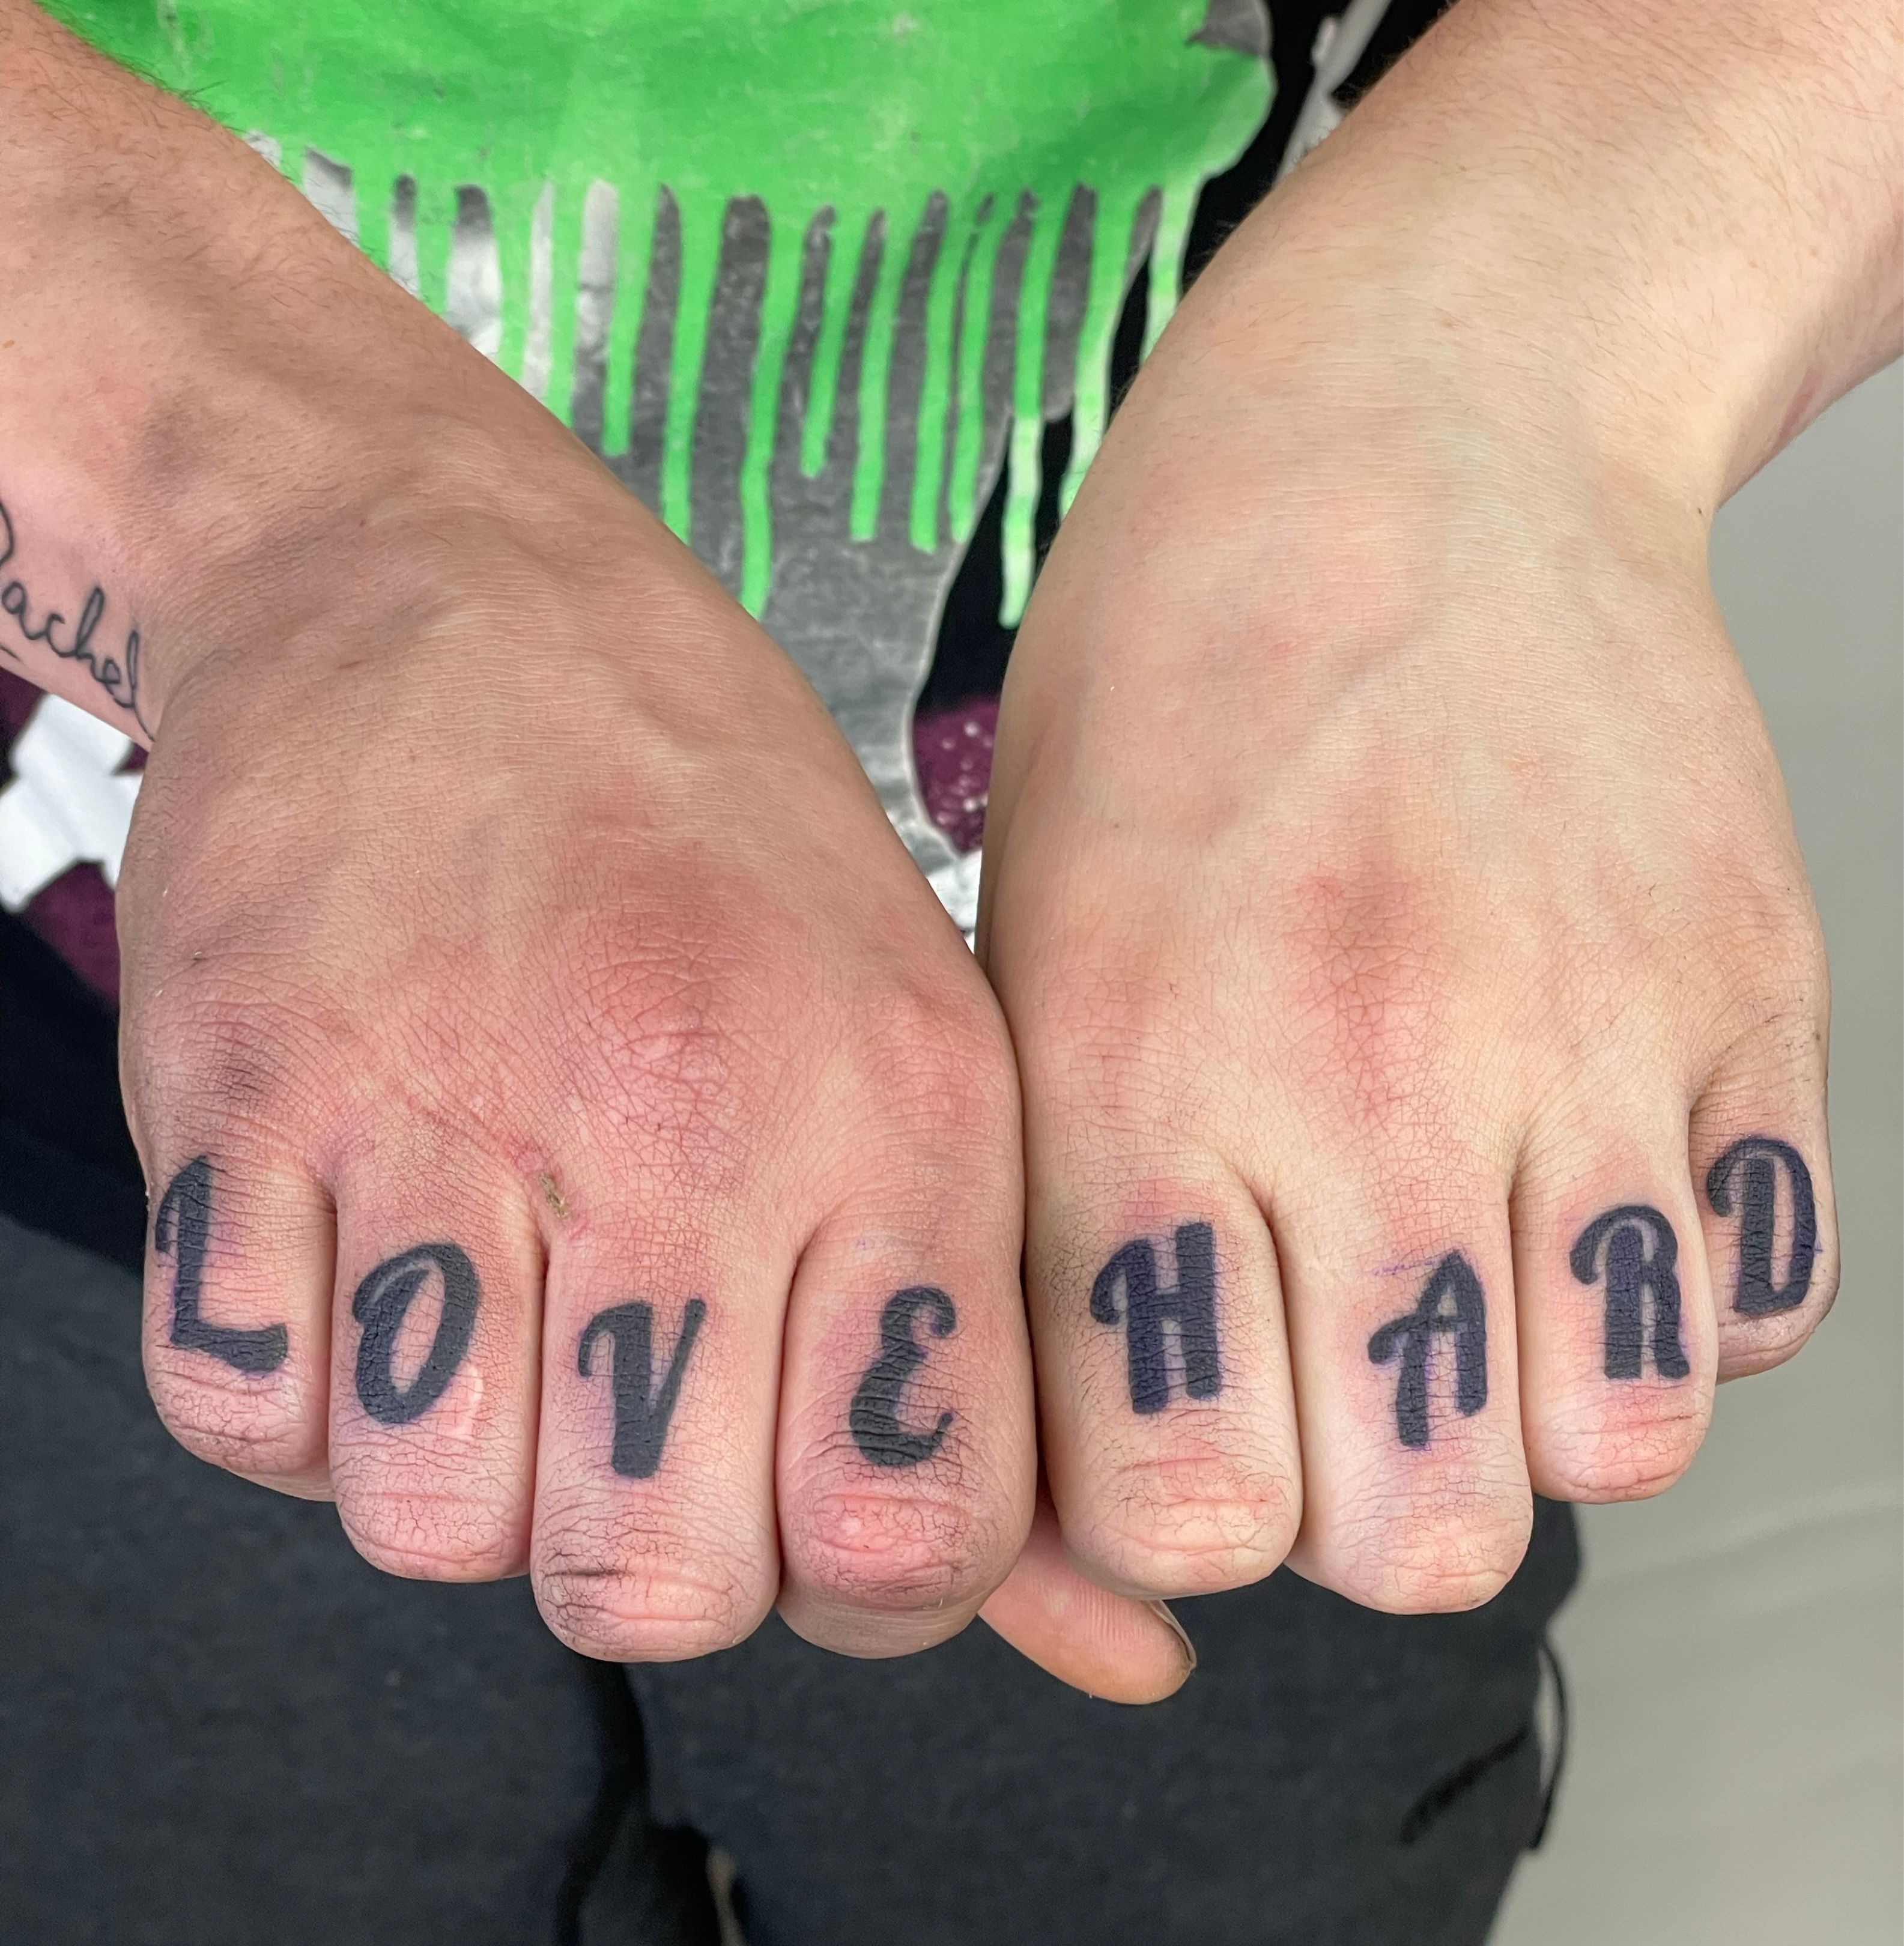 Tattoo uploaded by Spoken Hand Tattoo • 